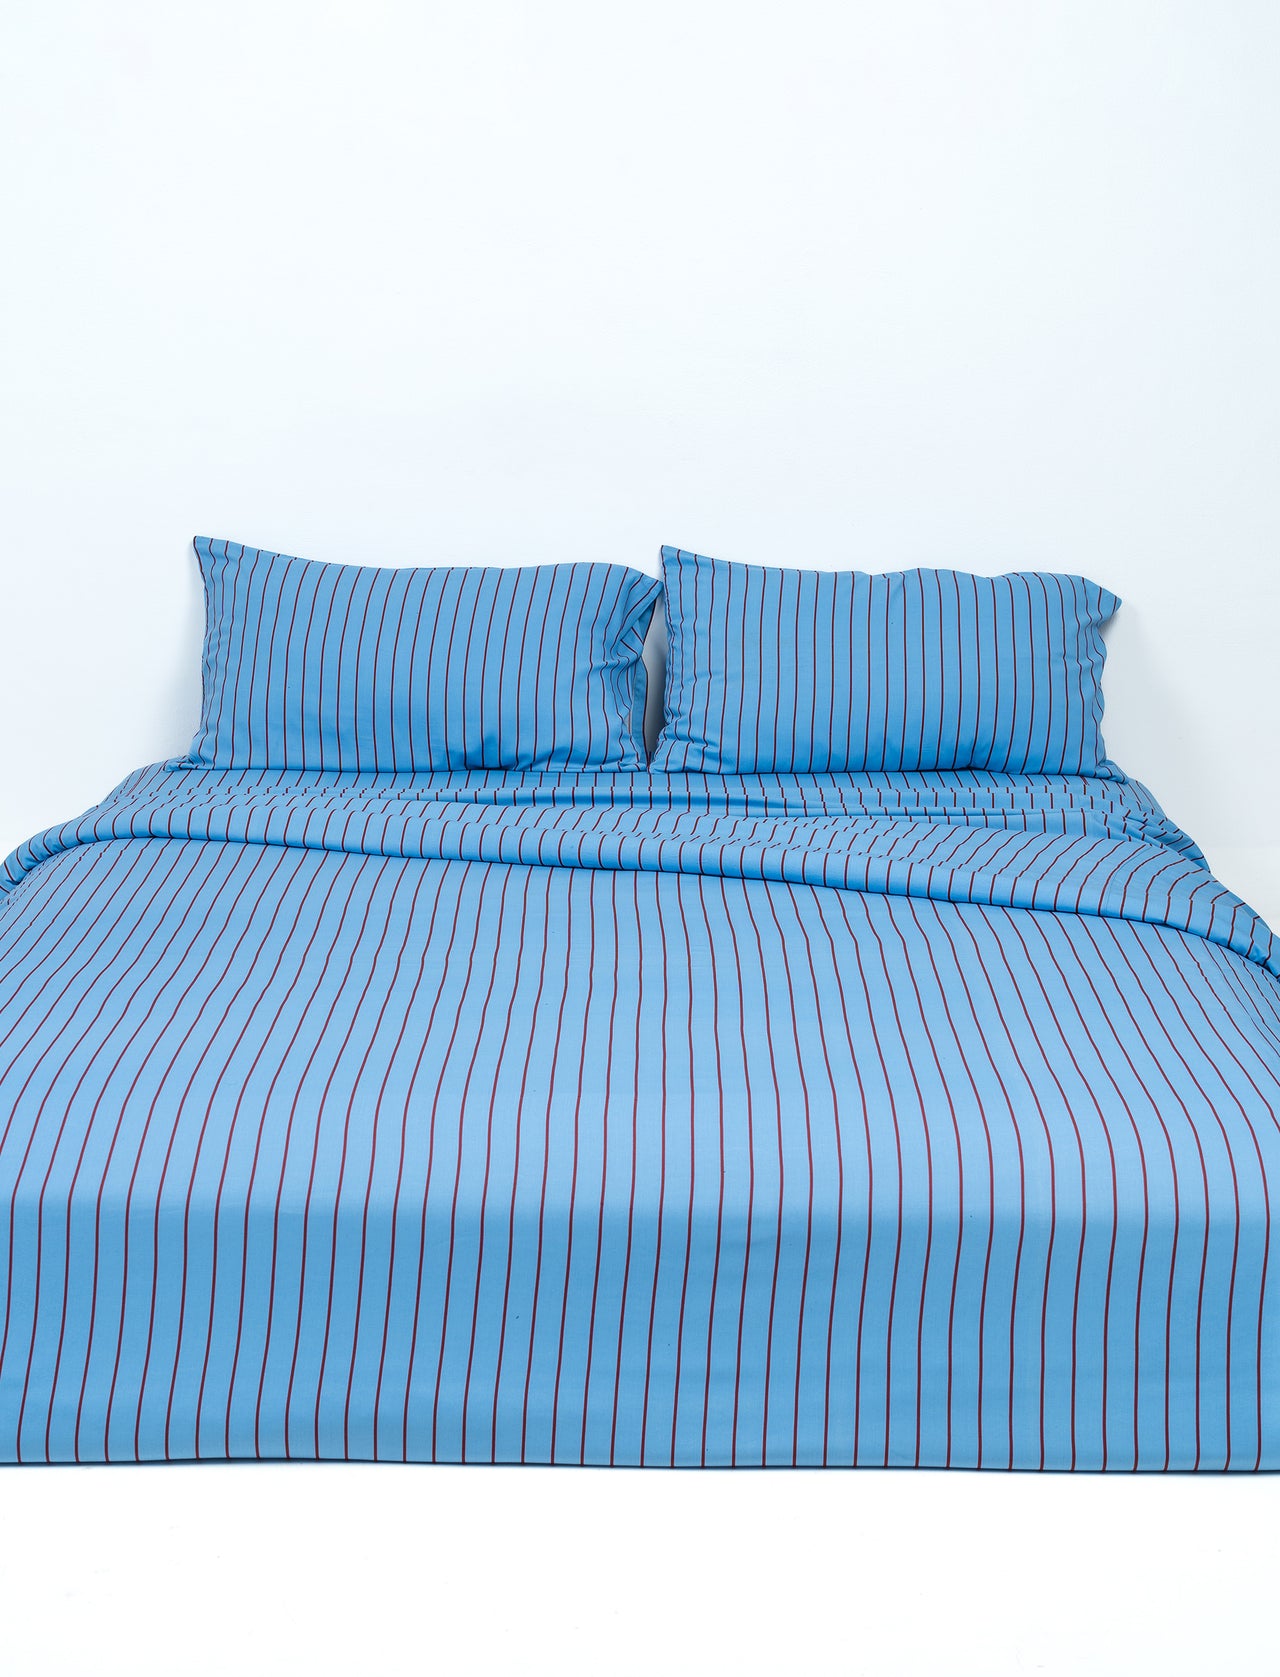 Blueberry Stripe Quilt Cover Set